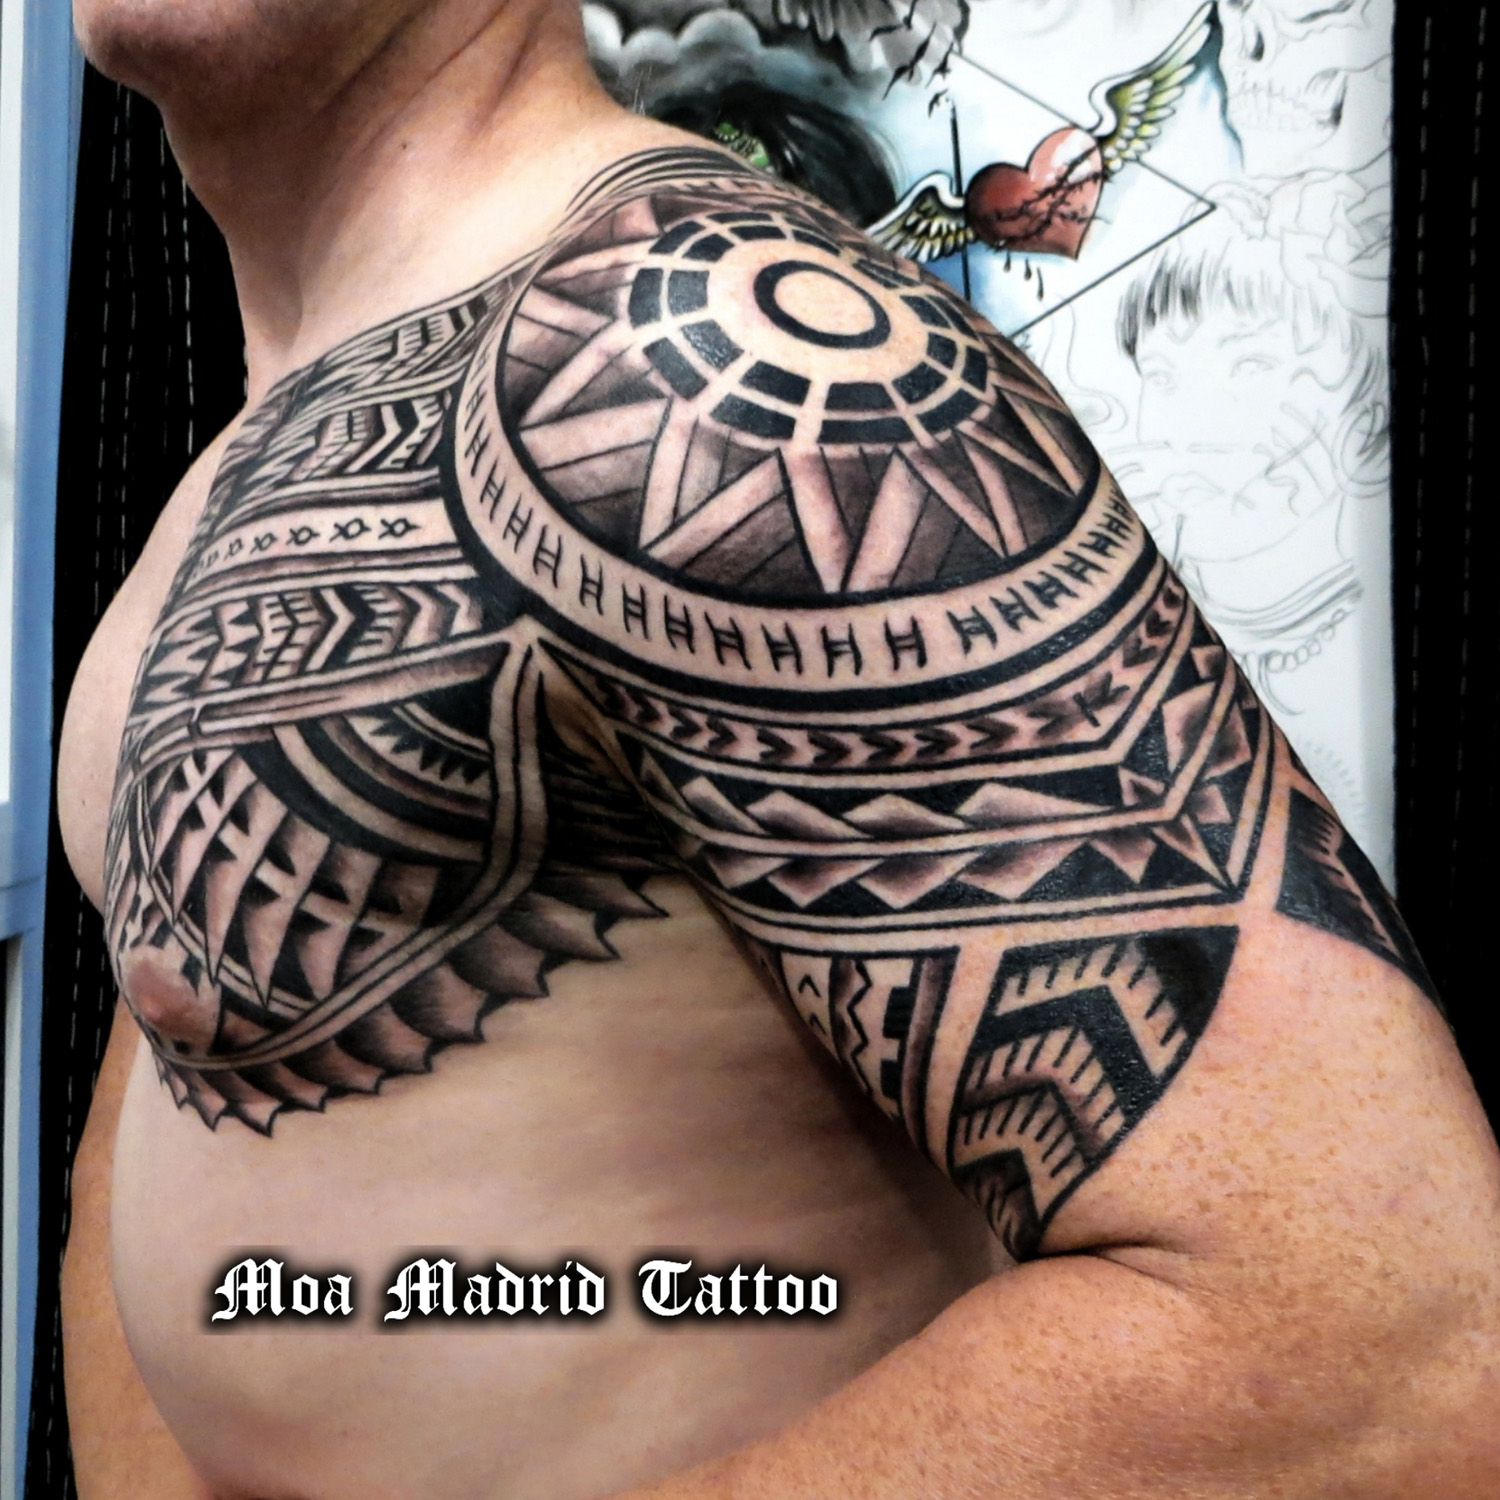 Tatuaje maorí en pecho, hombro y brazo hecho en Madrid: WhatsApp 650 018 319